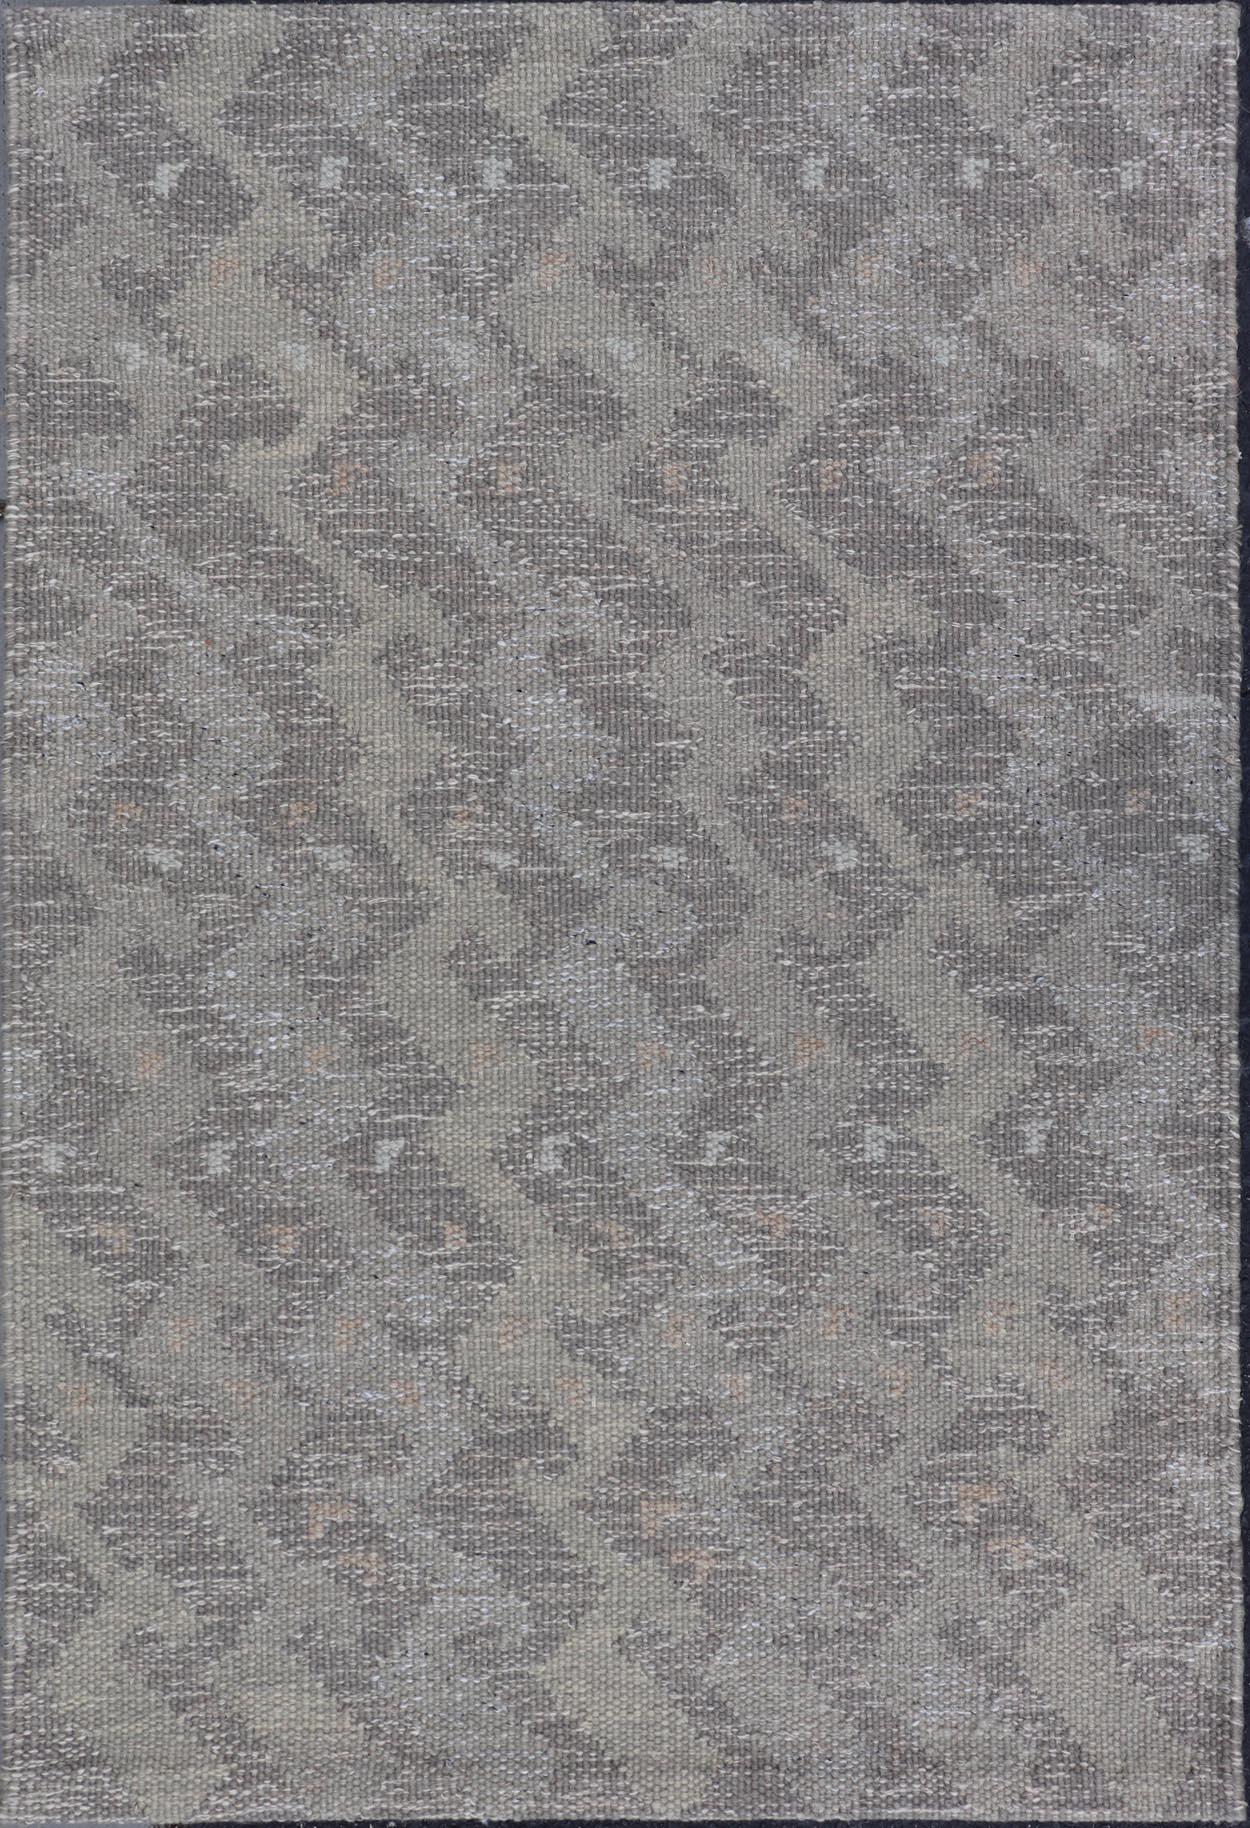 Geometric Modern Scandinavian Flat-Weave Design Rug in Gray And Light Gray Tones